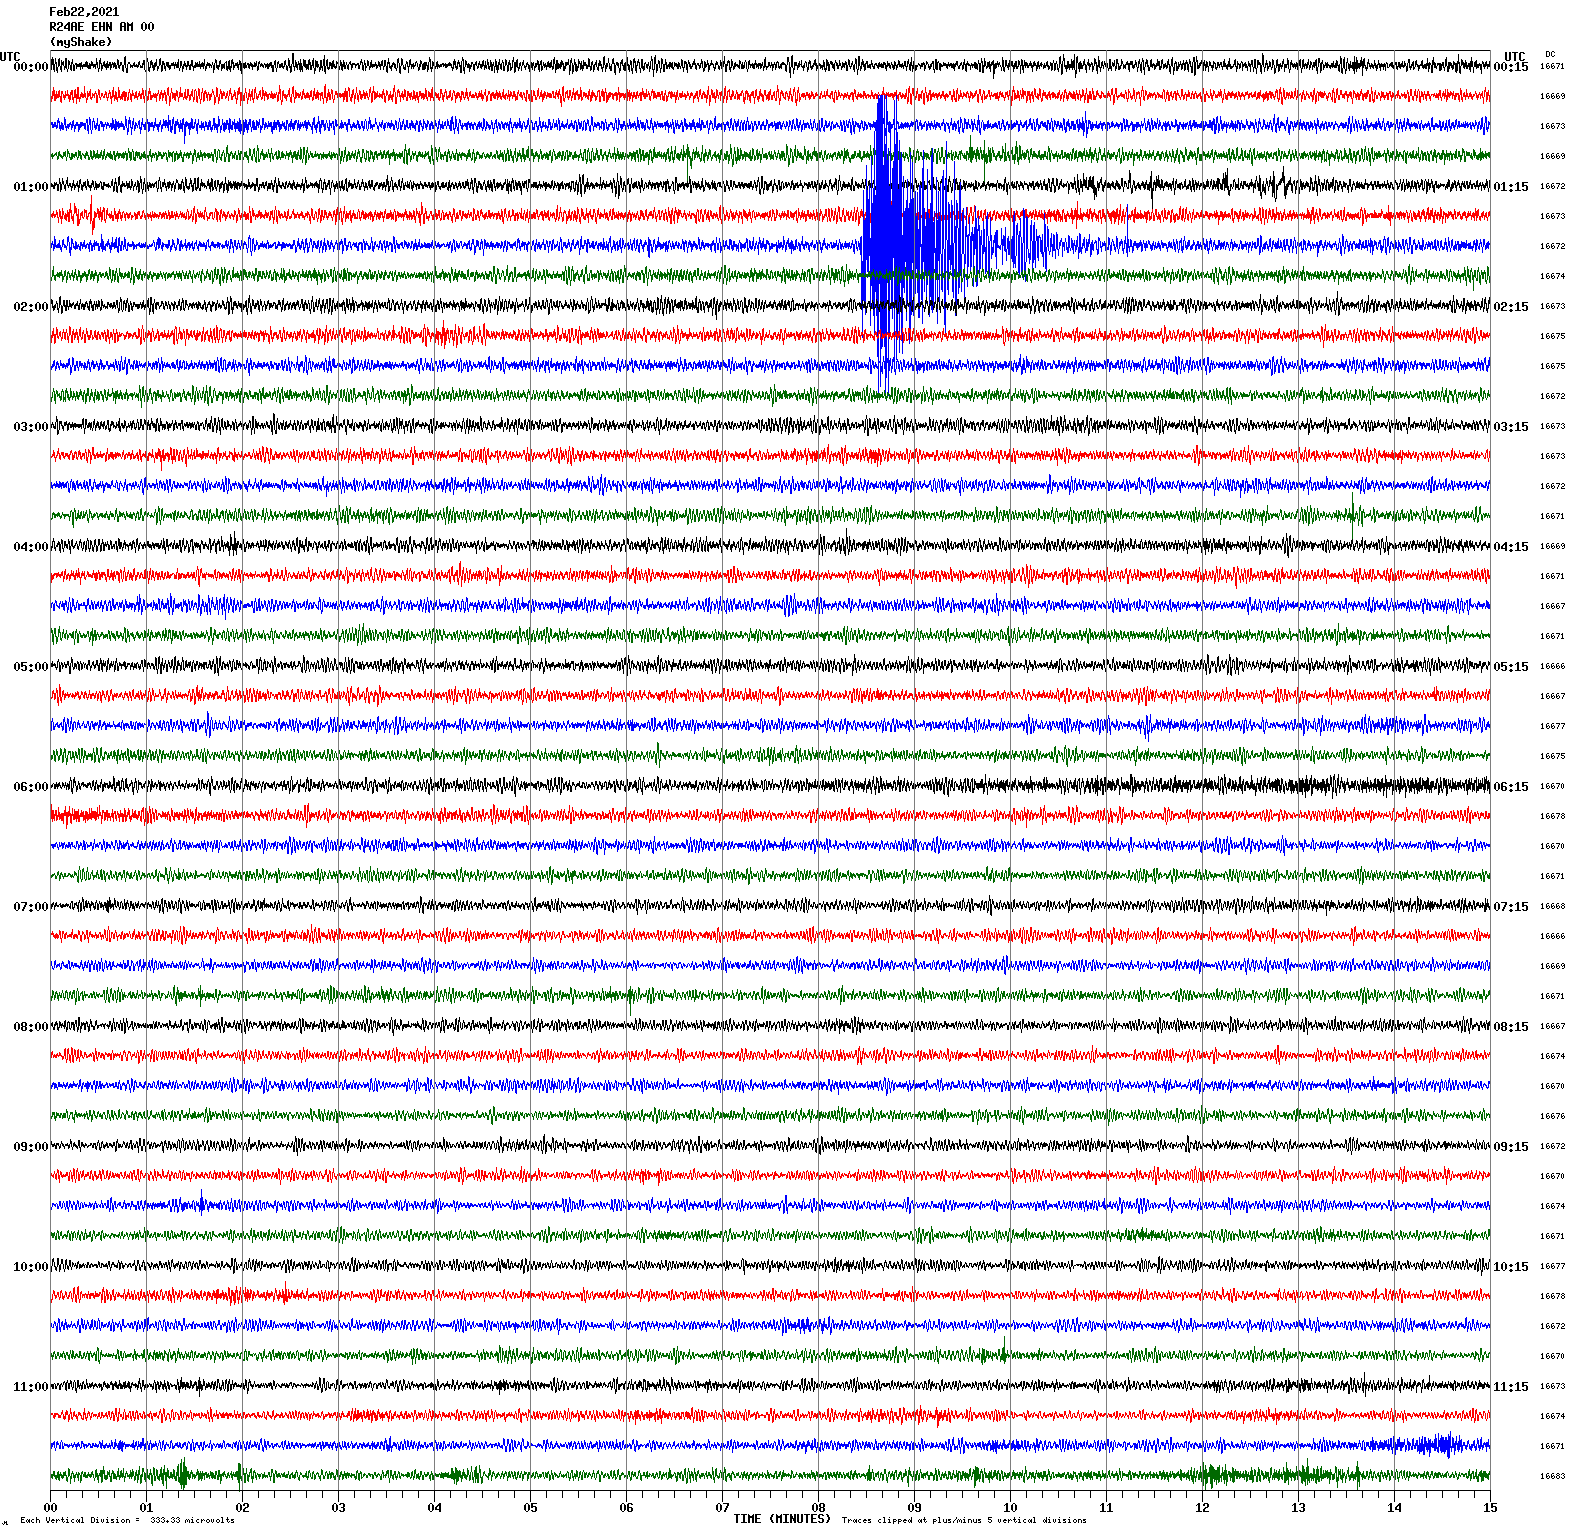 /seismic-data/R24AE/R24AE_EHN_AM_00.2021022200.gif